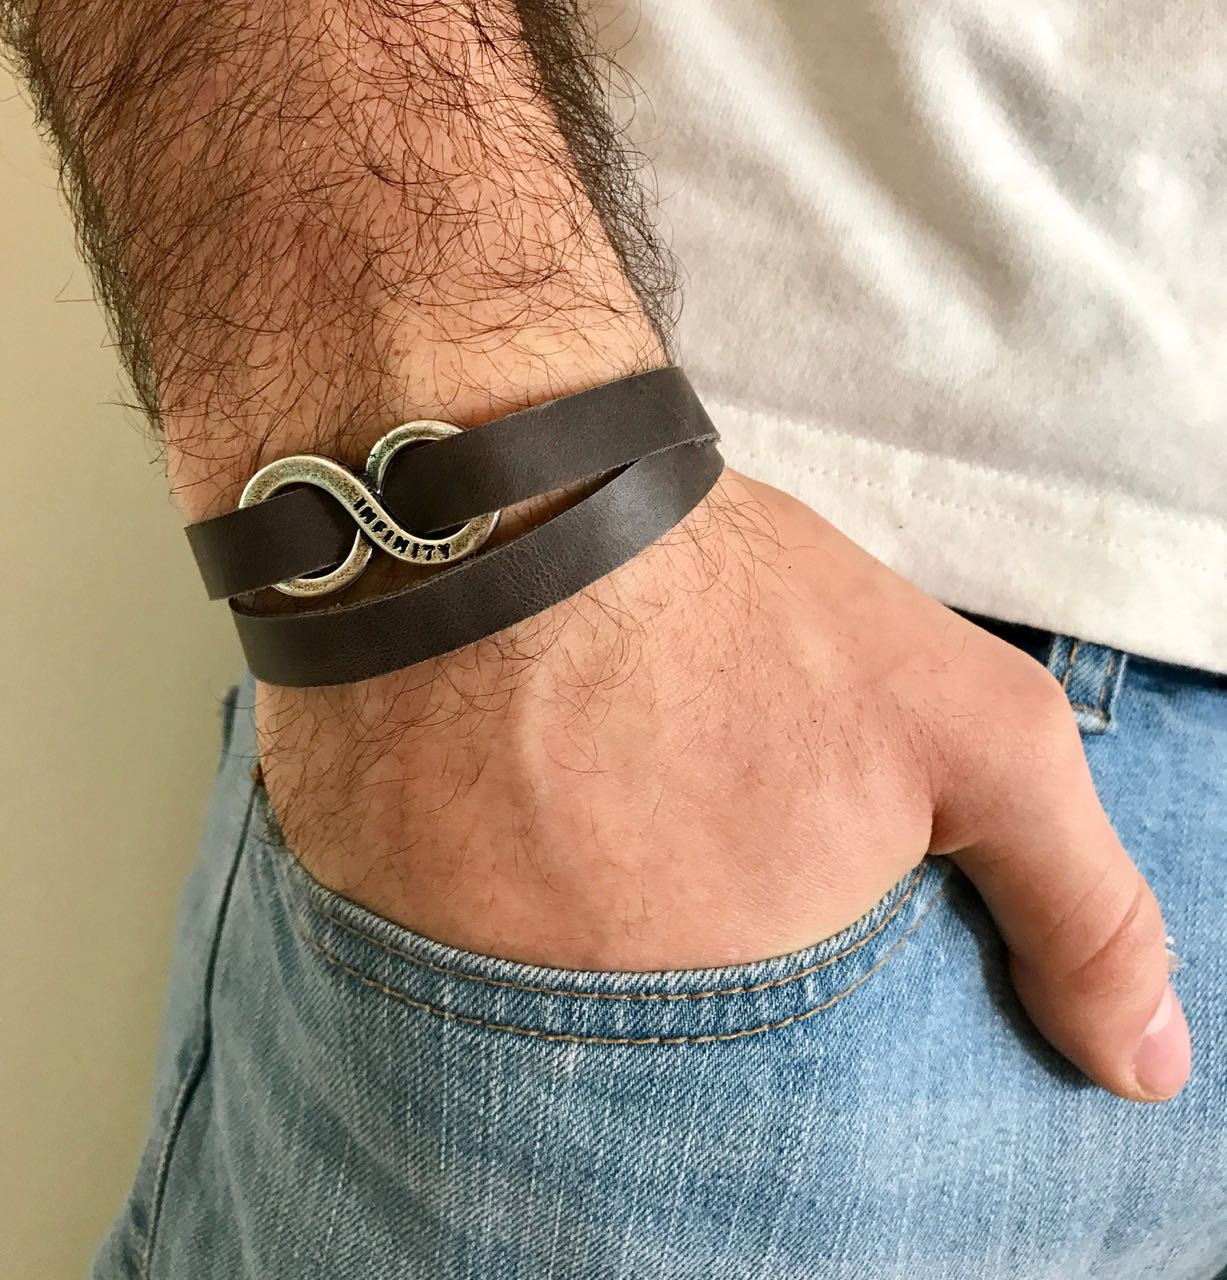 Men's Bracelet - Men's Infinity Bracelet - Men's Leather Bracelet - Men's Jewelry - Men's Gift -